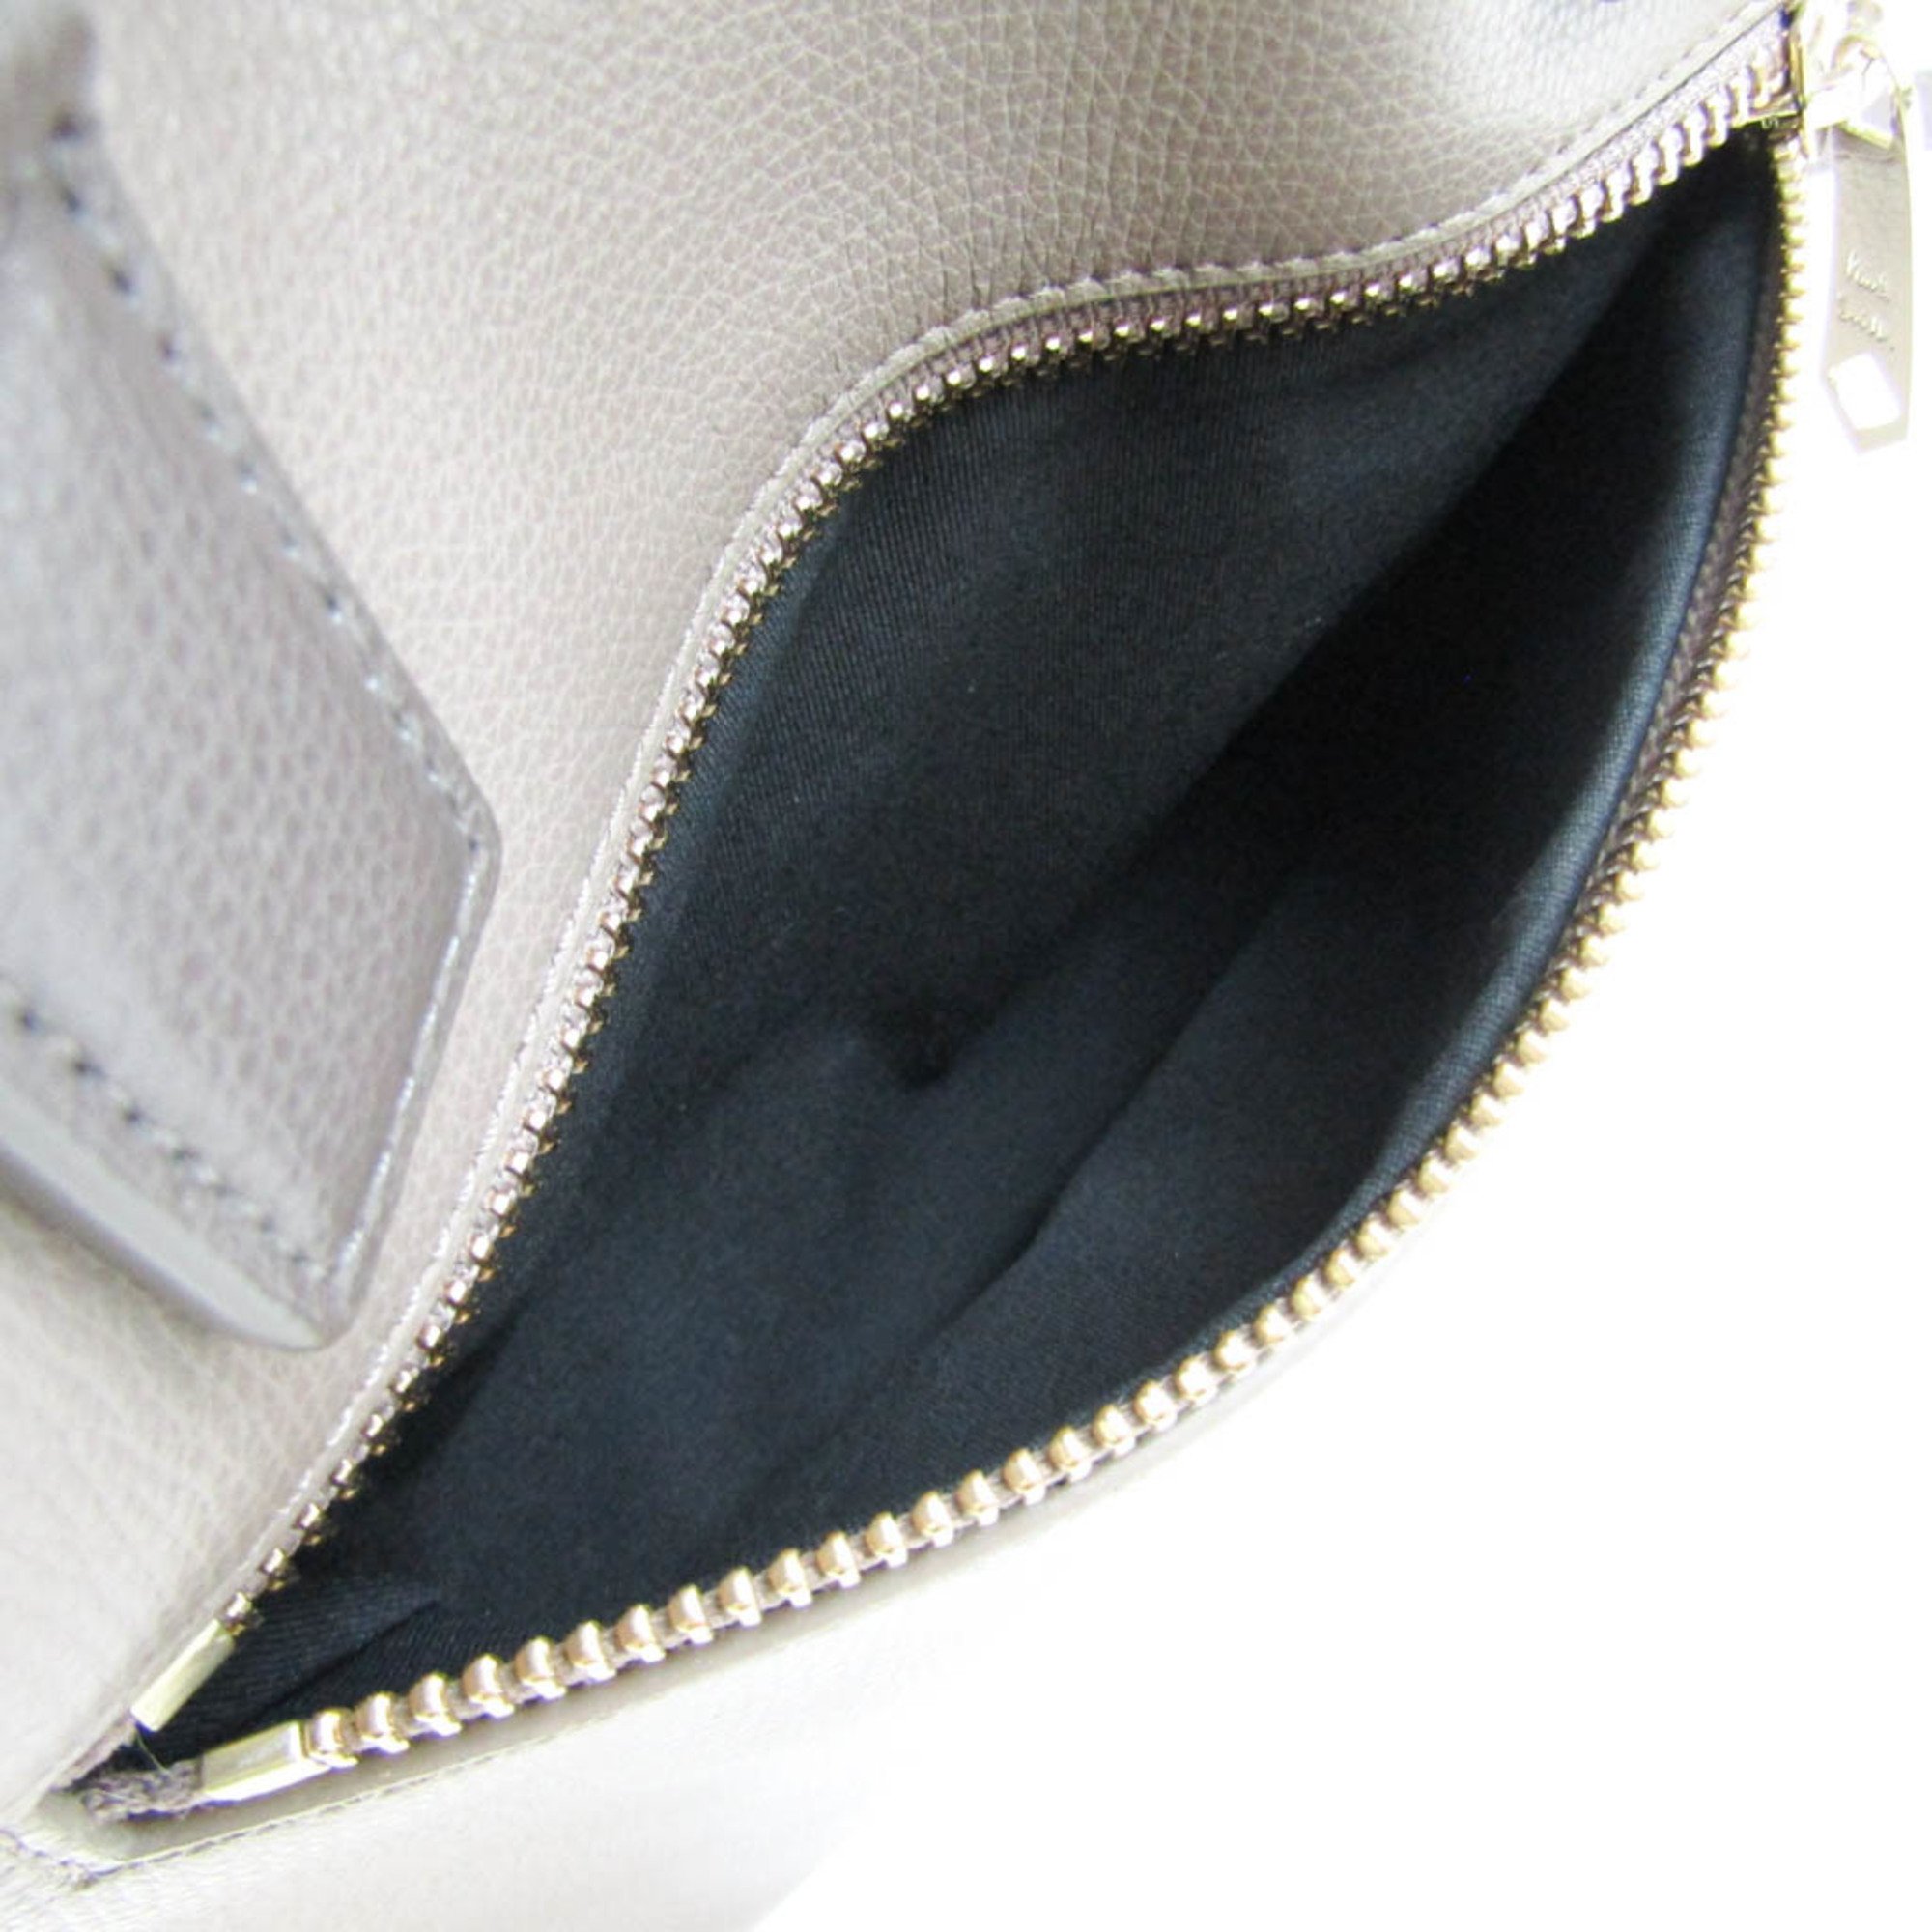 Paul Smith Women's Leather Handbag,Shoulder Bag Grayish,Pink